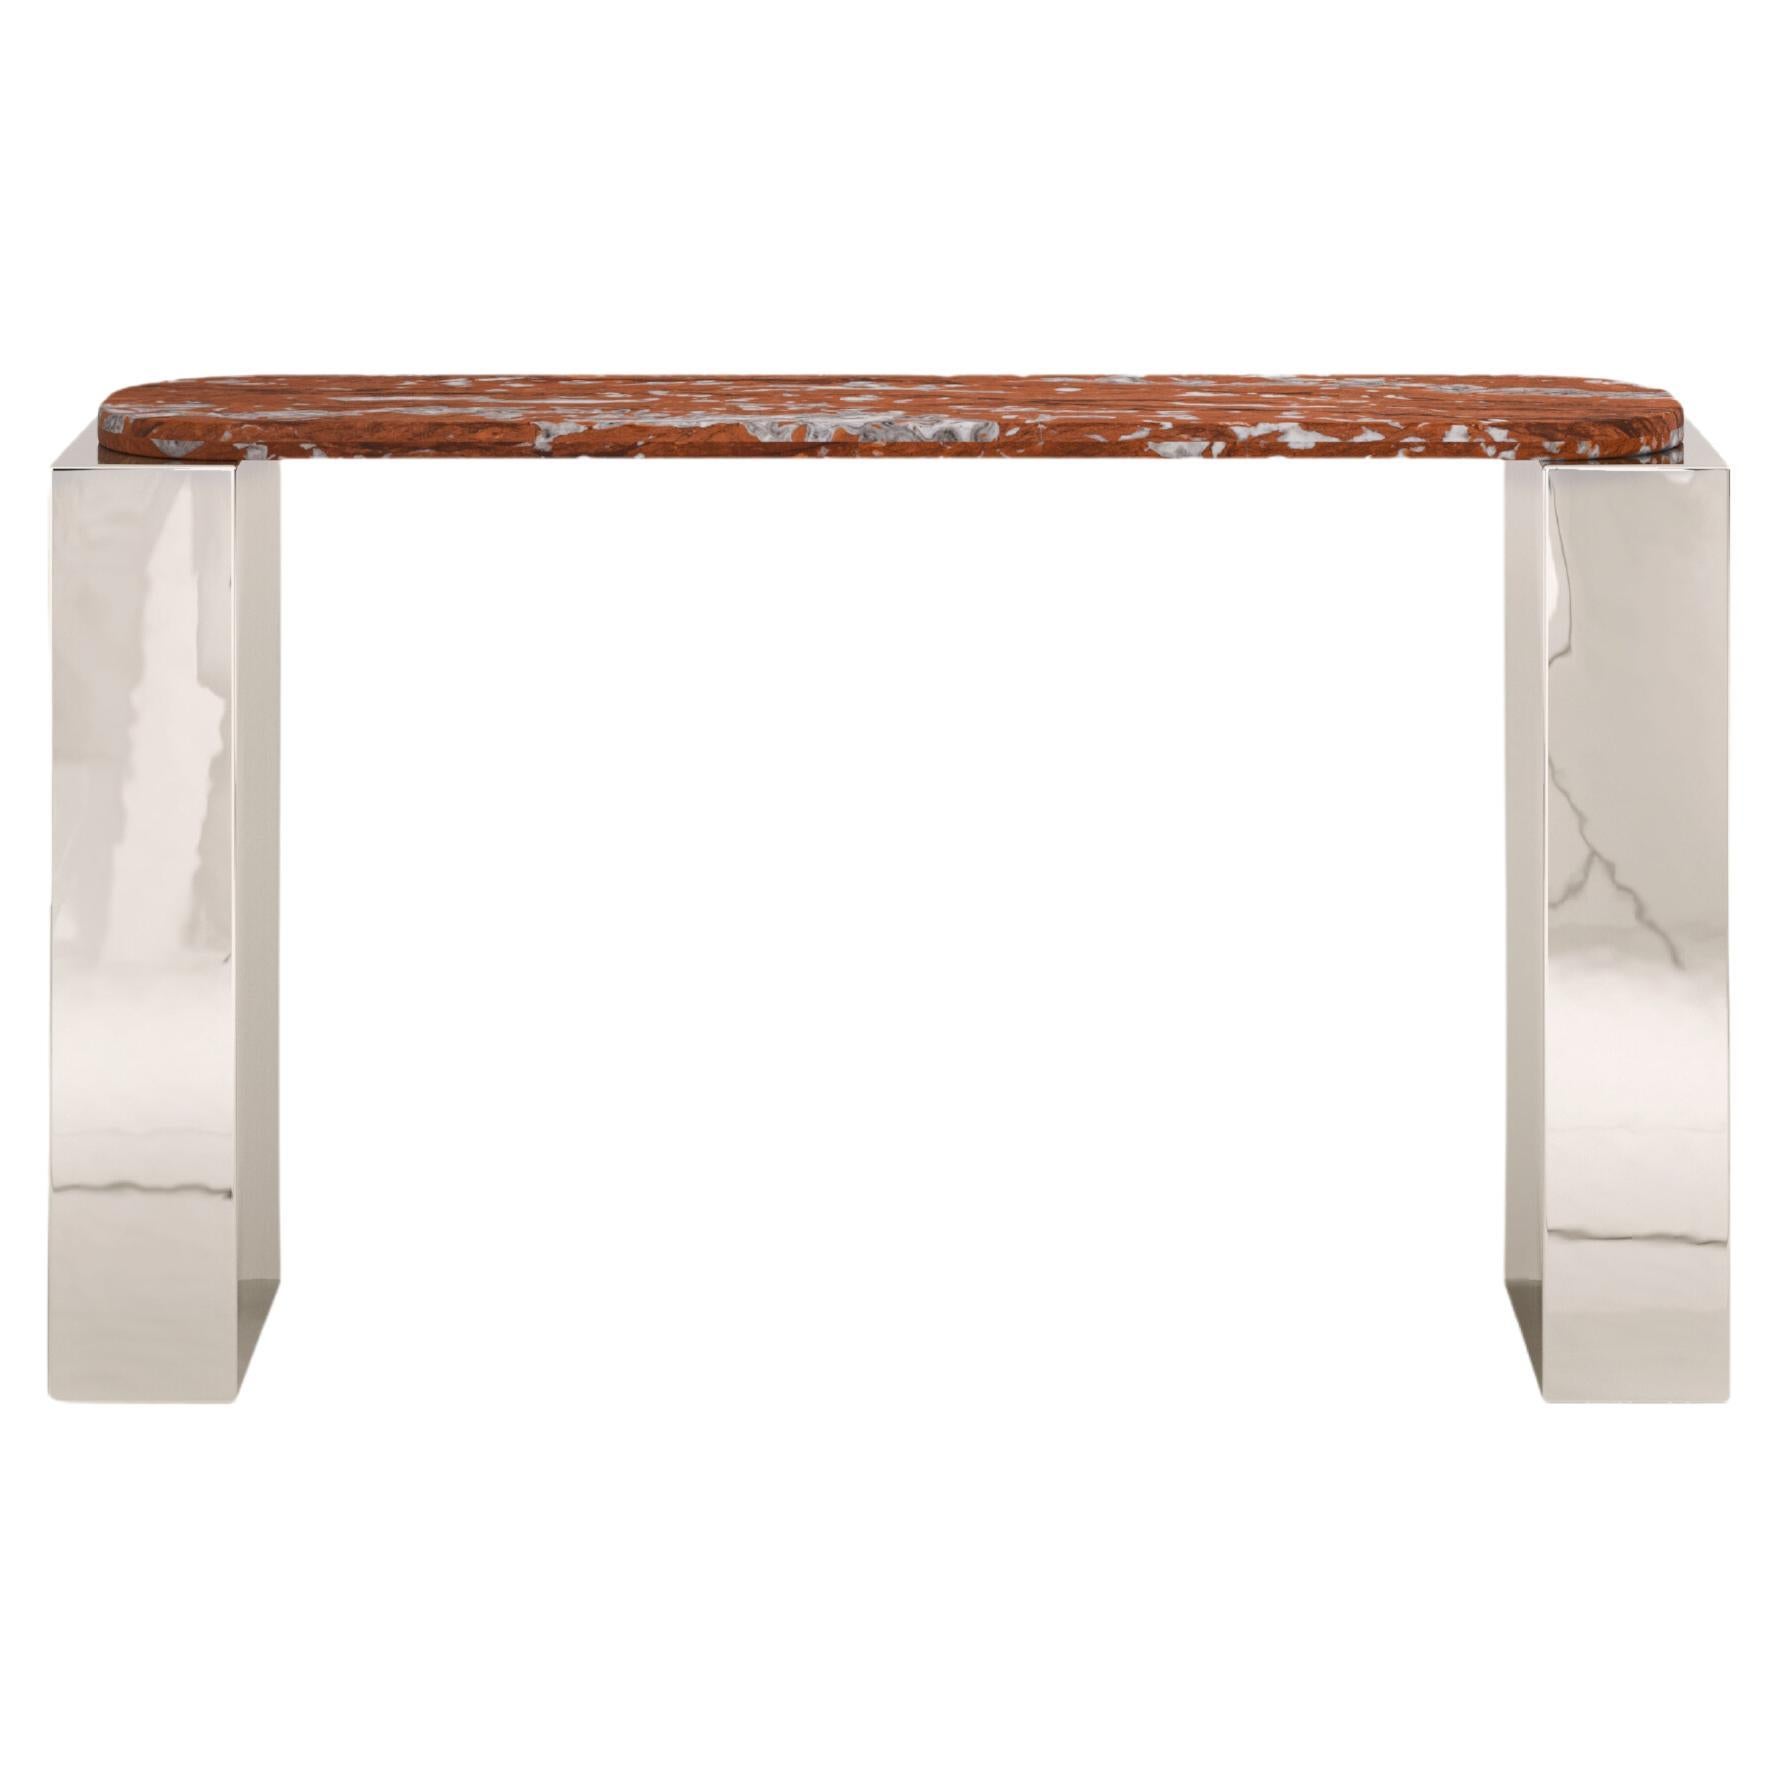 FORM(LA) Cubo Console Table 50”L x 17”W x 36”H Rosso Francia Marble & Chrome For Sale